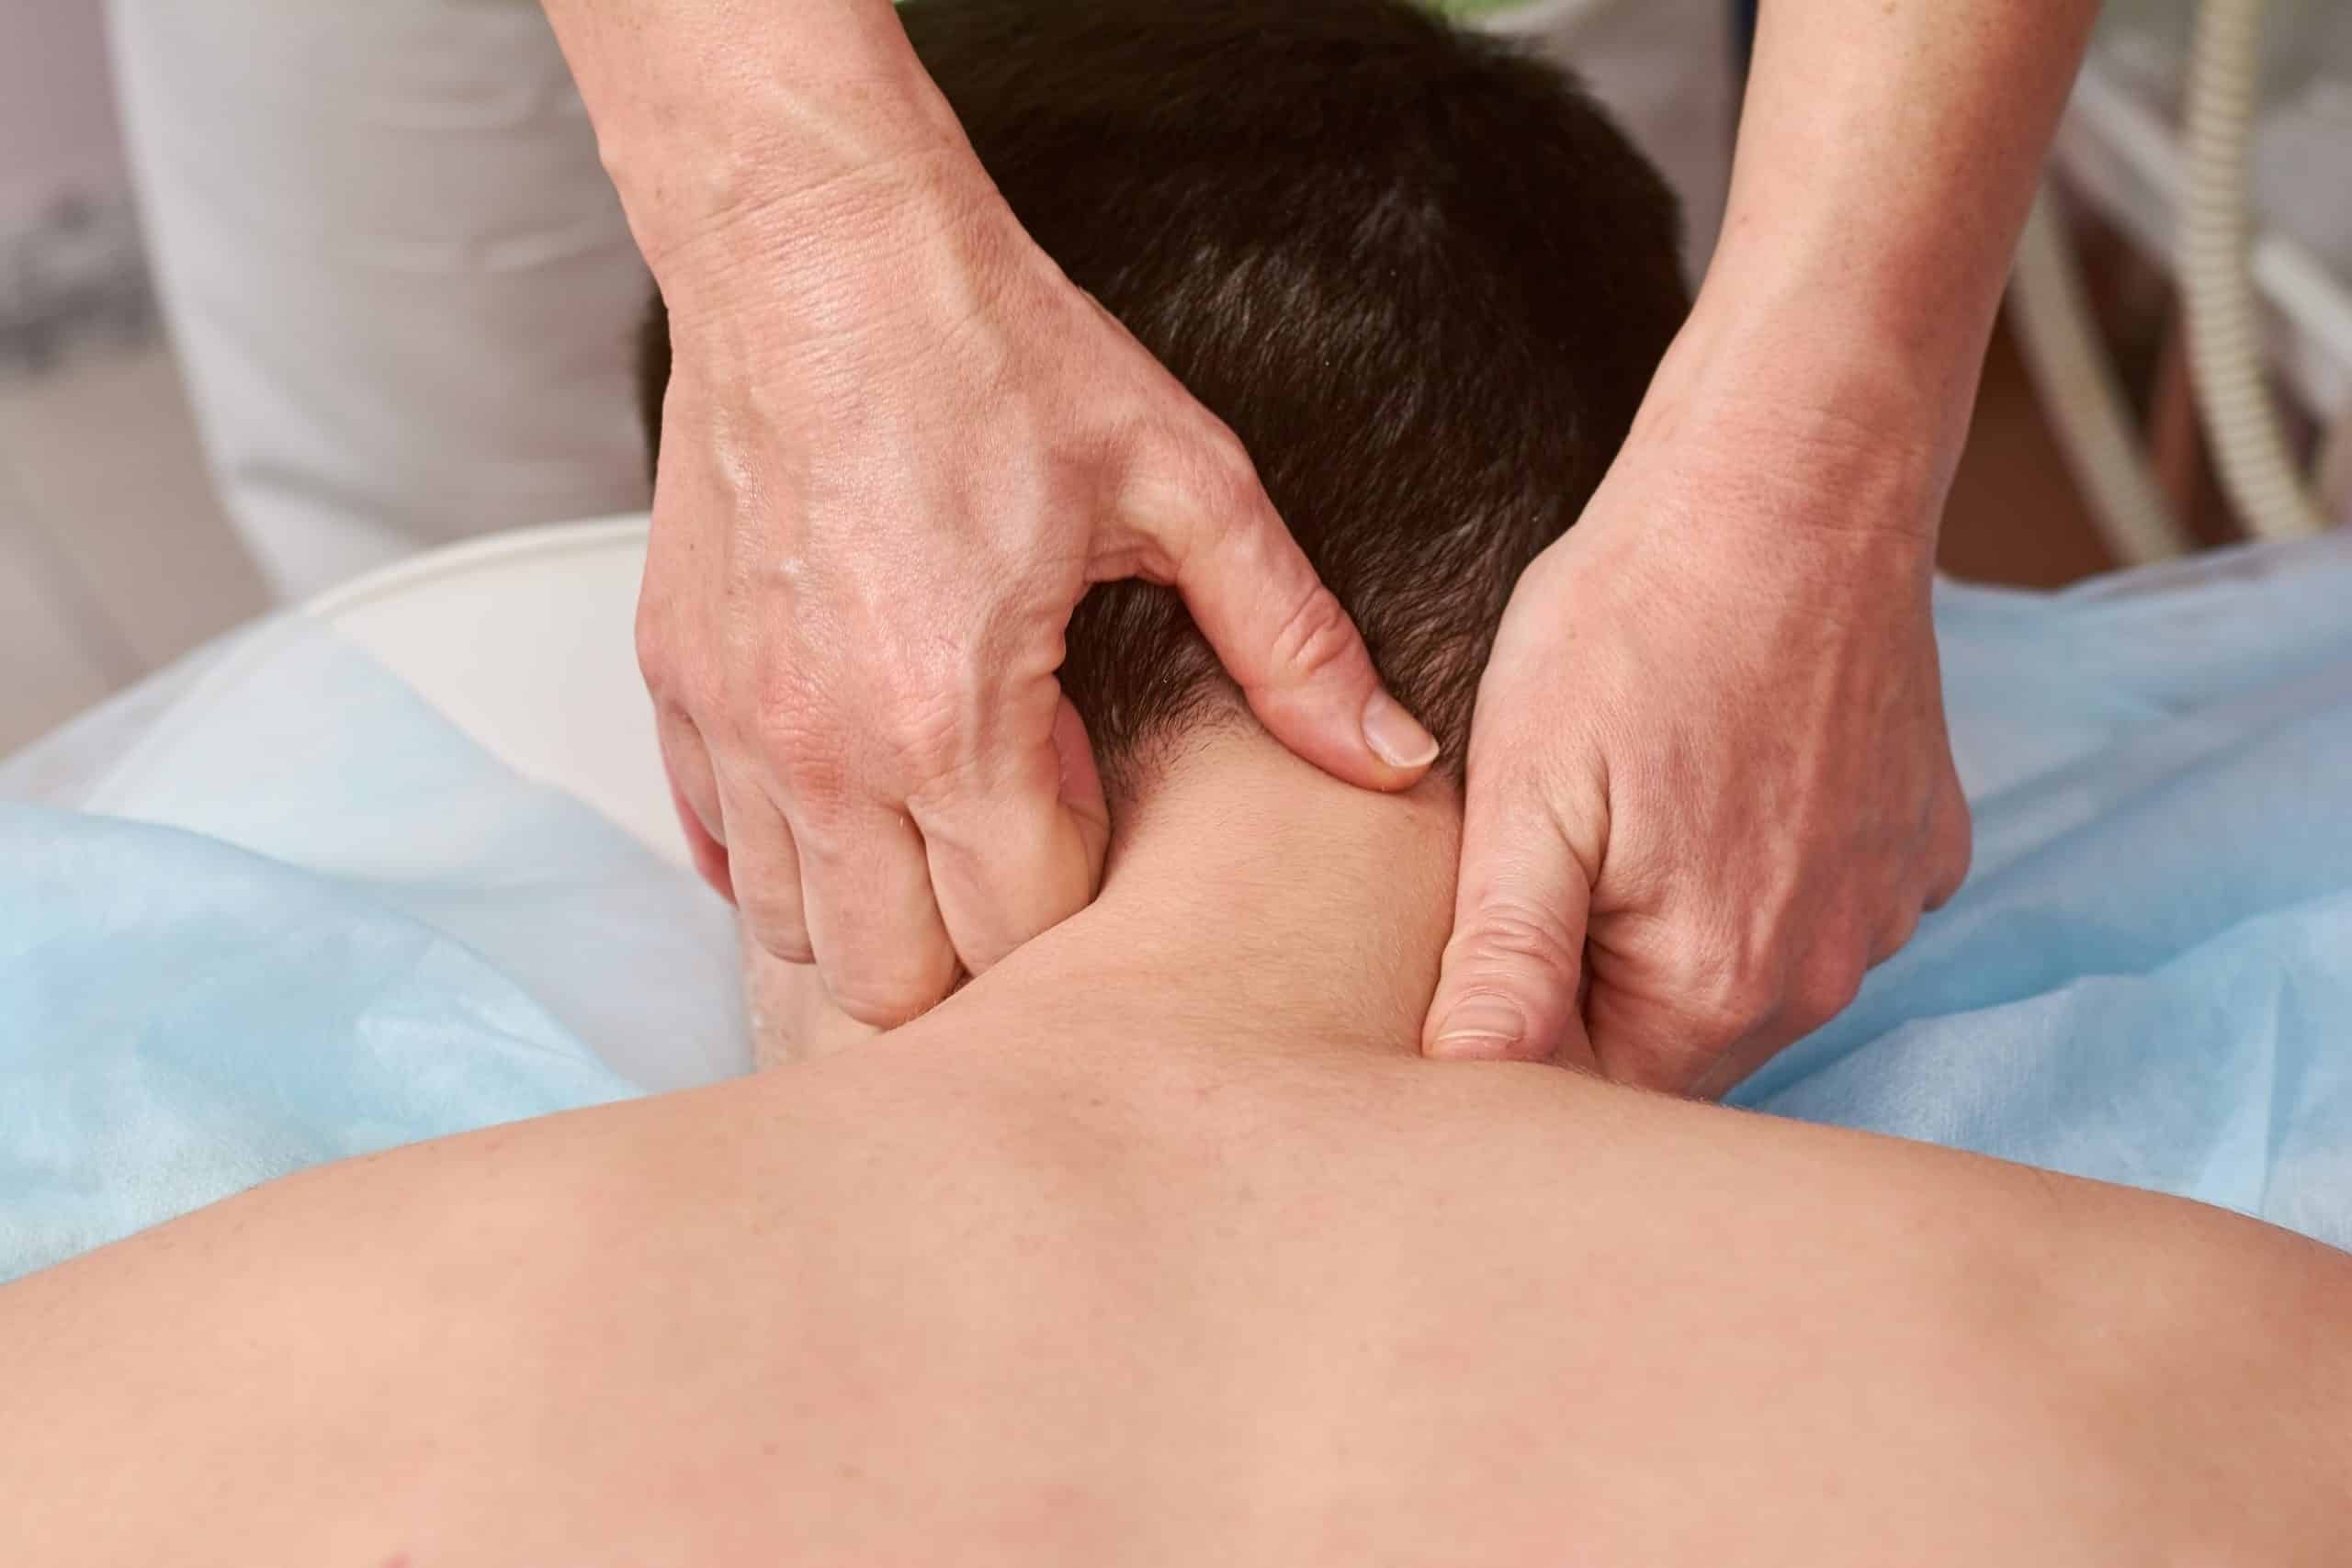 Patient receiving neck treatment from chiropractor.